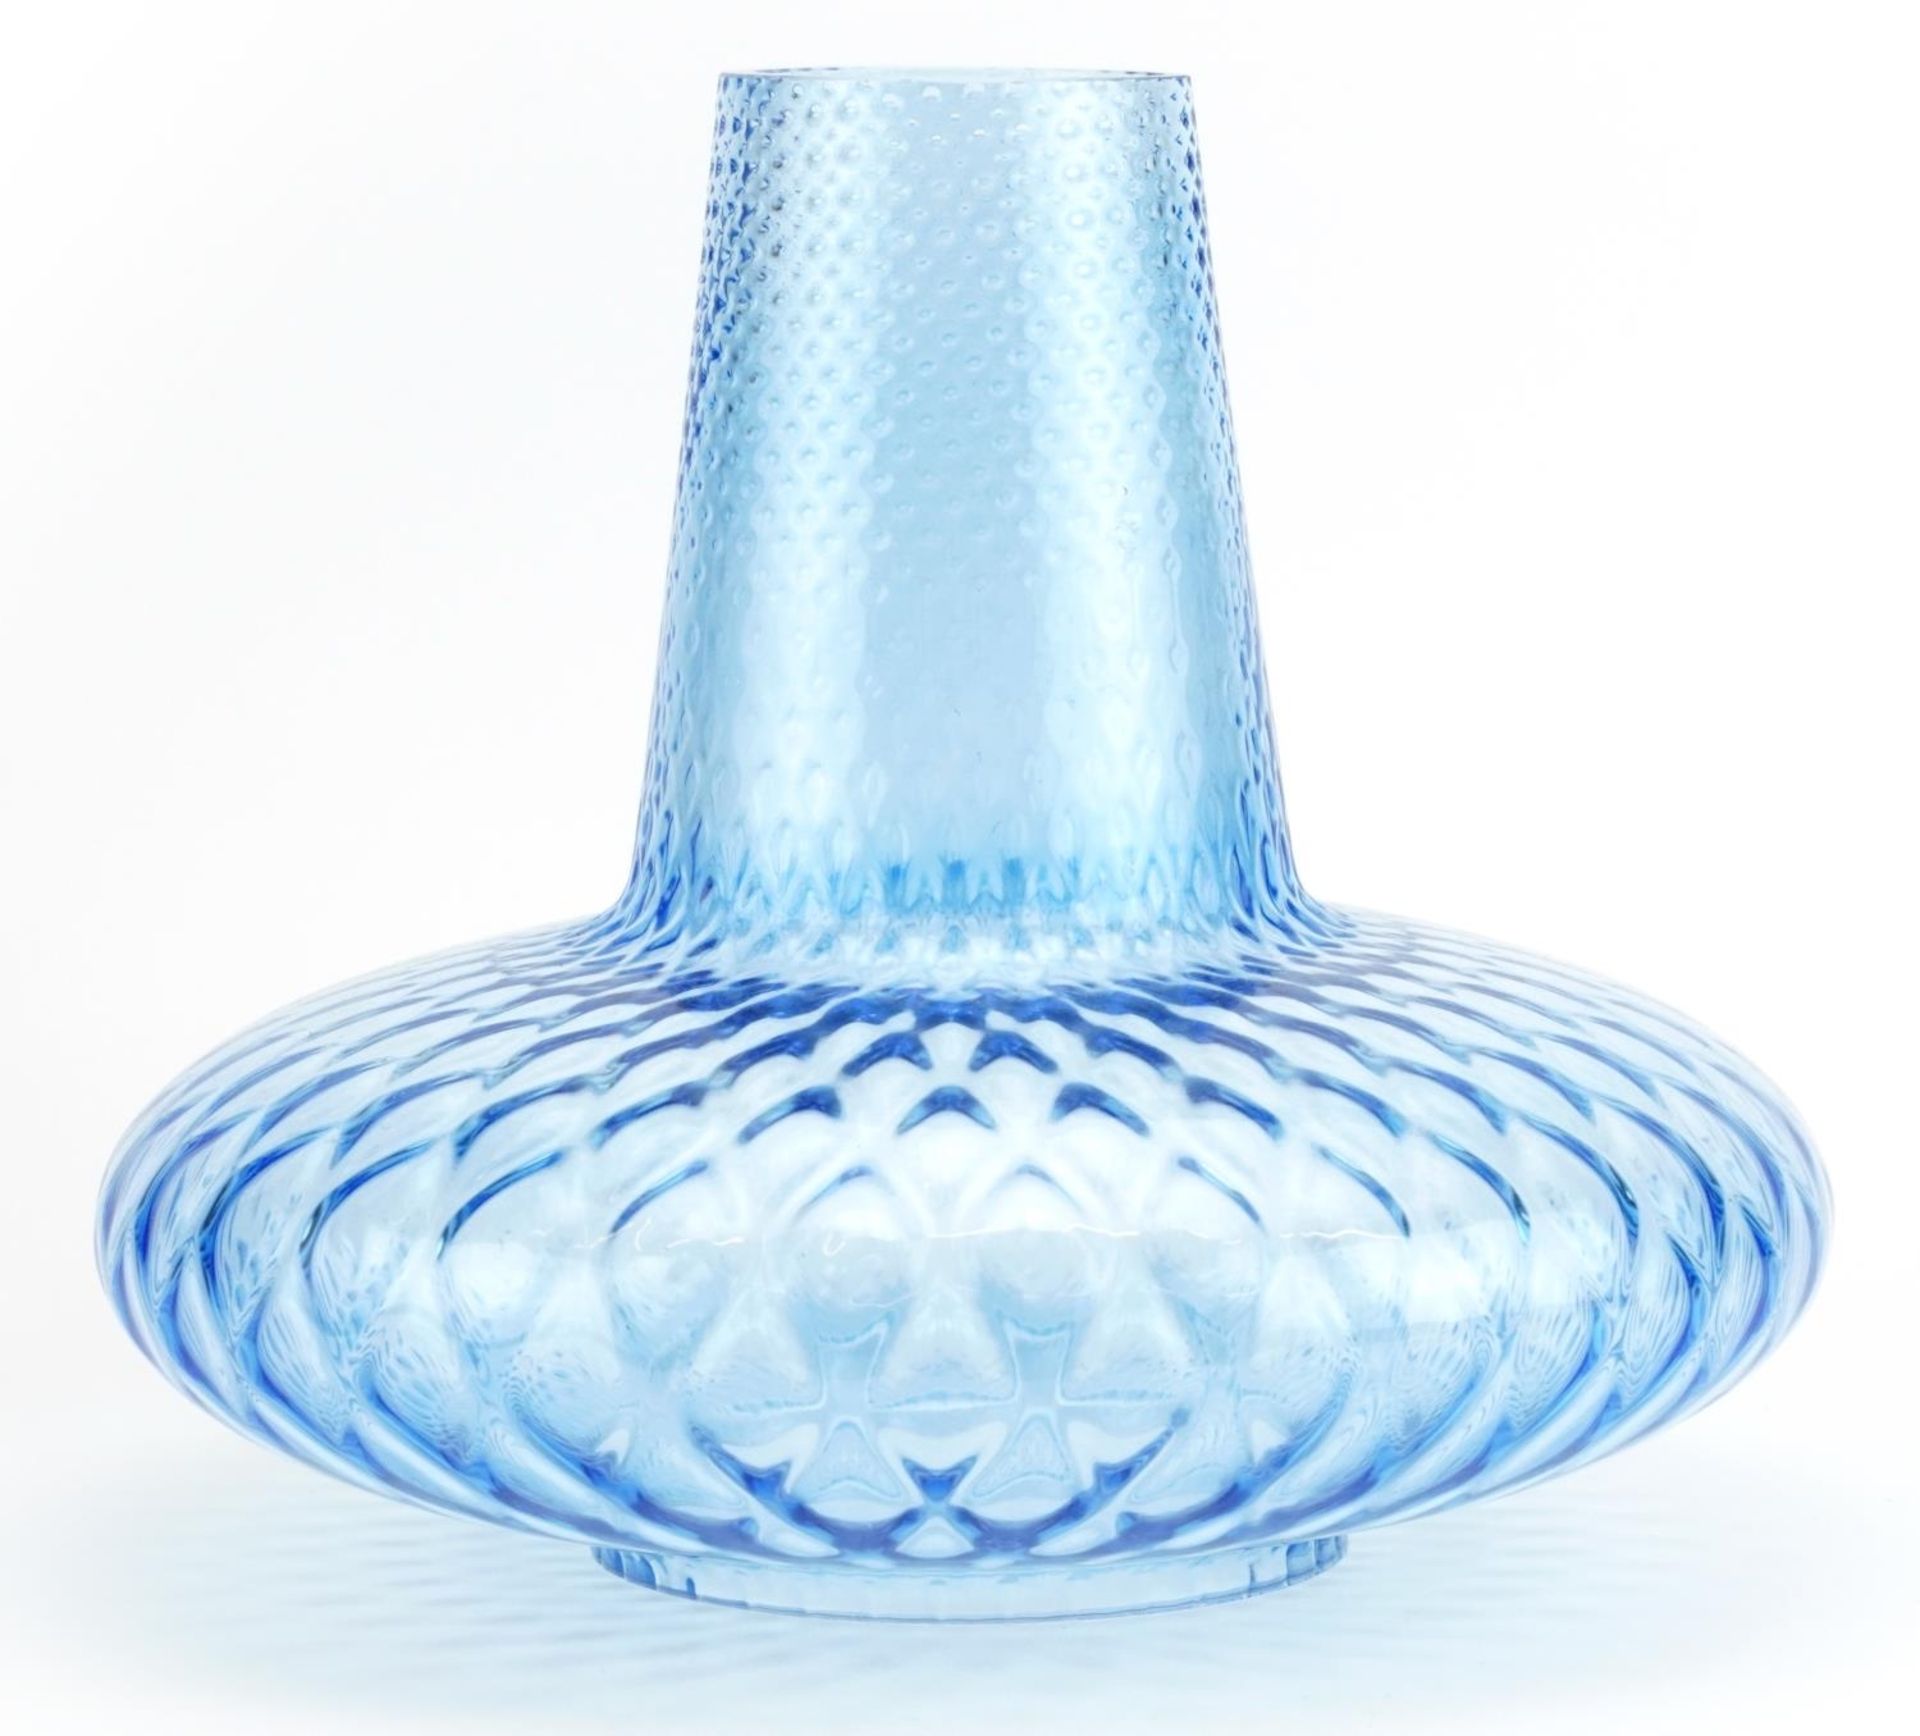 Blue art glass lamp shade, 27cm high x 30cm in diameter - Image 2 of 3